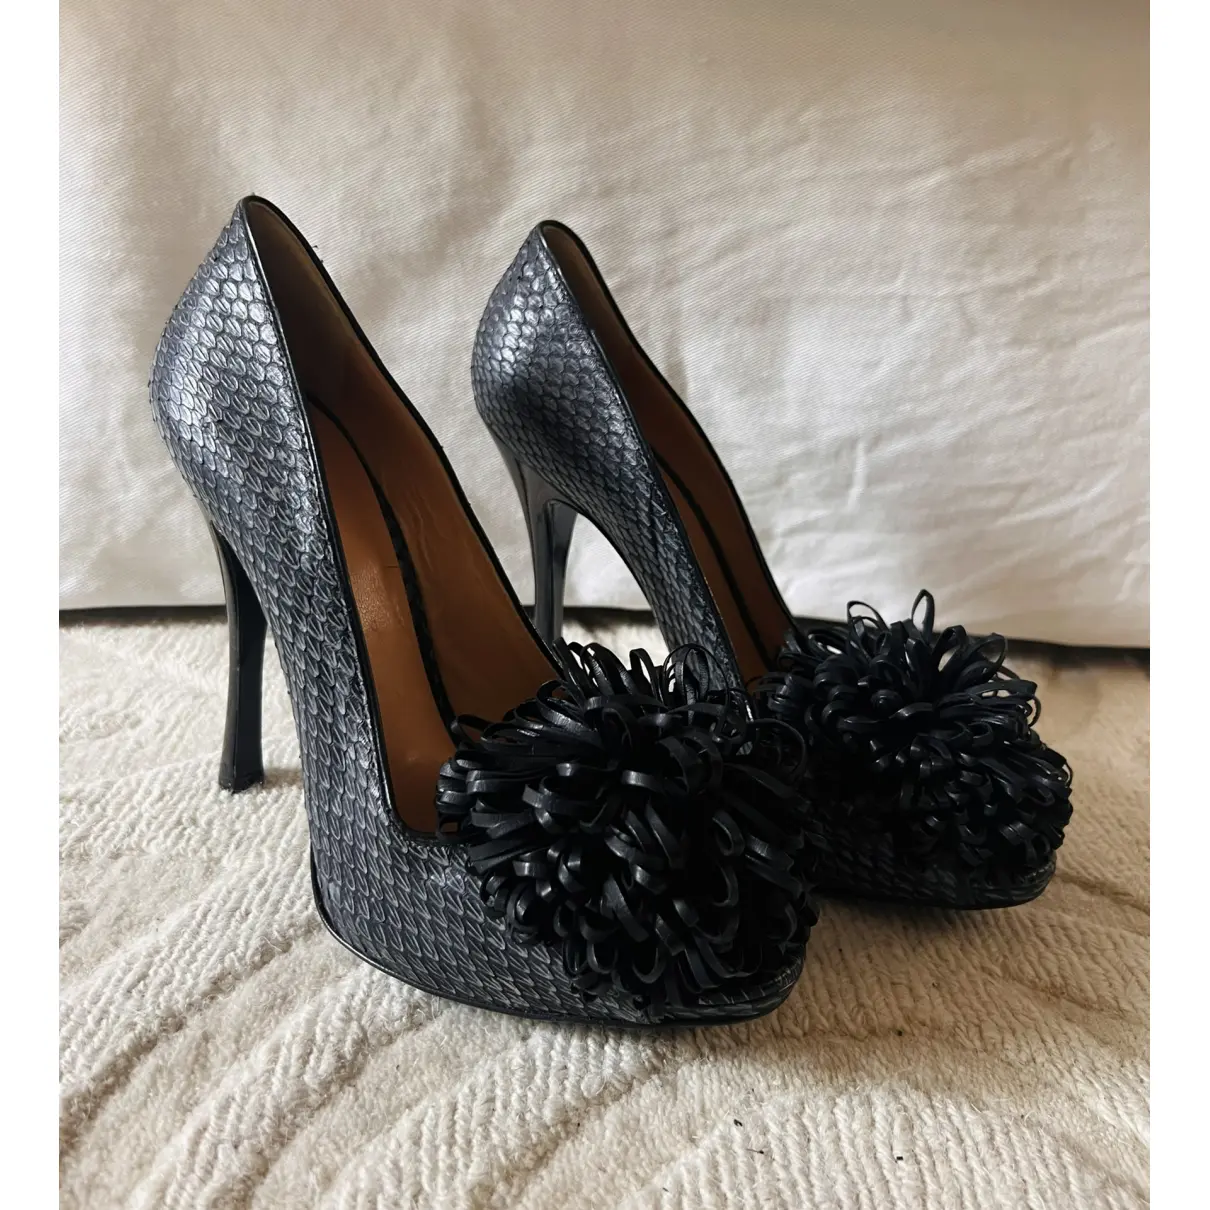 Buy Pollini Python heels online